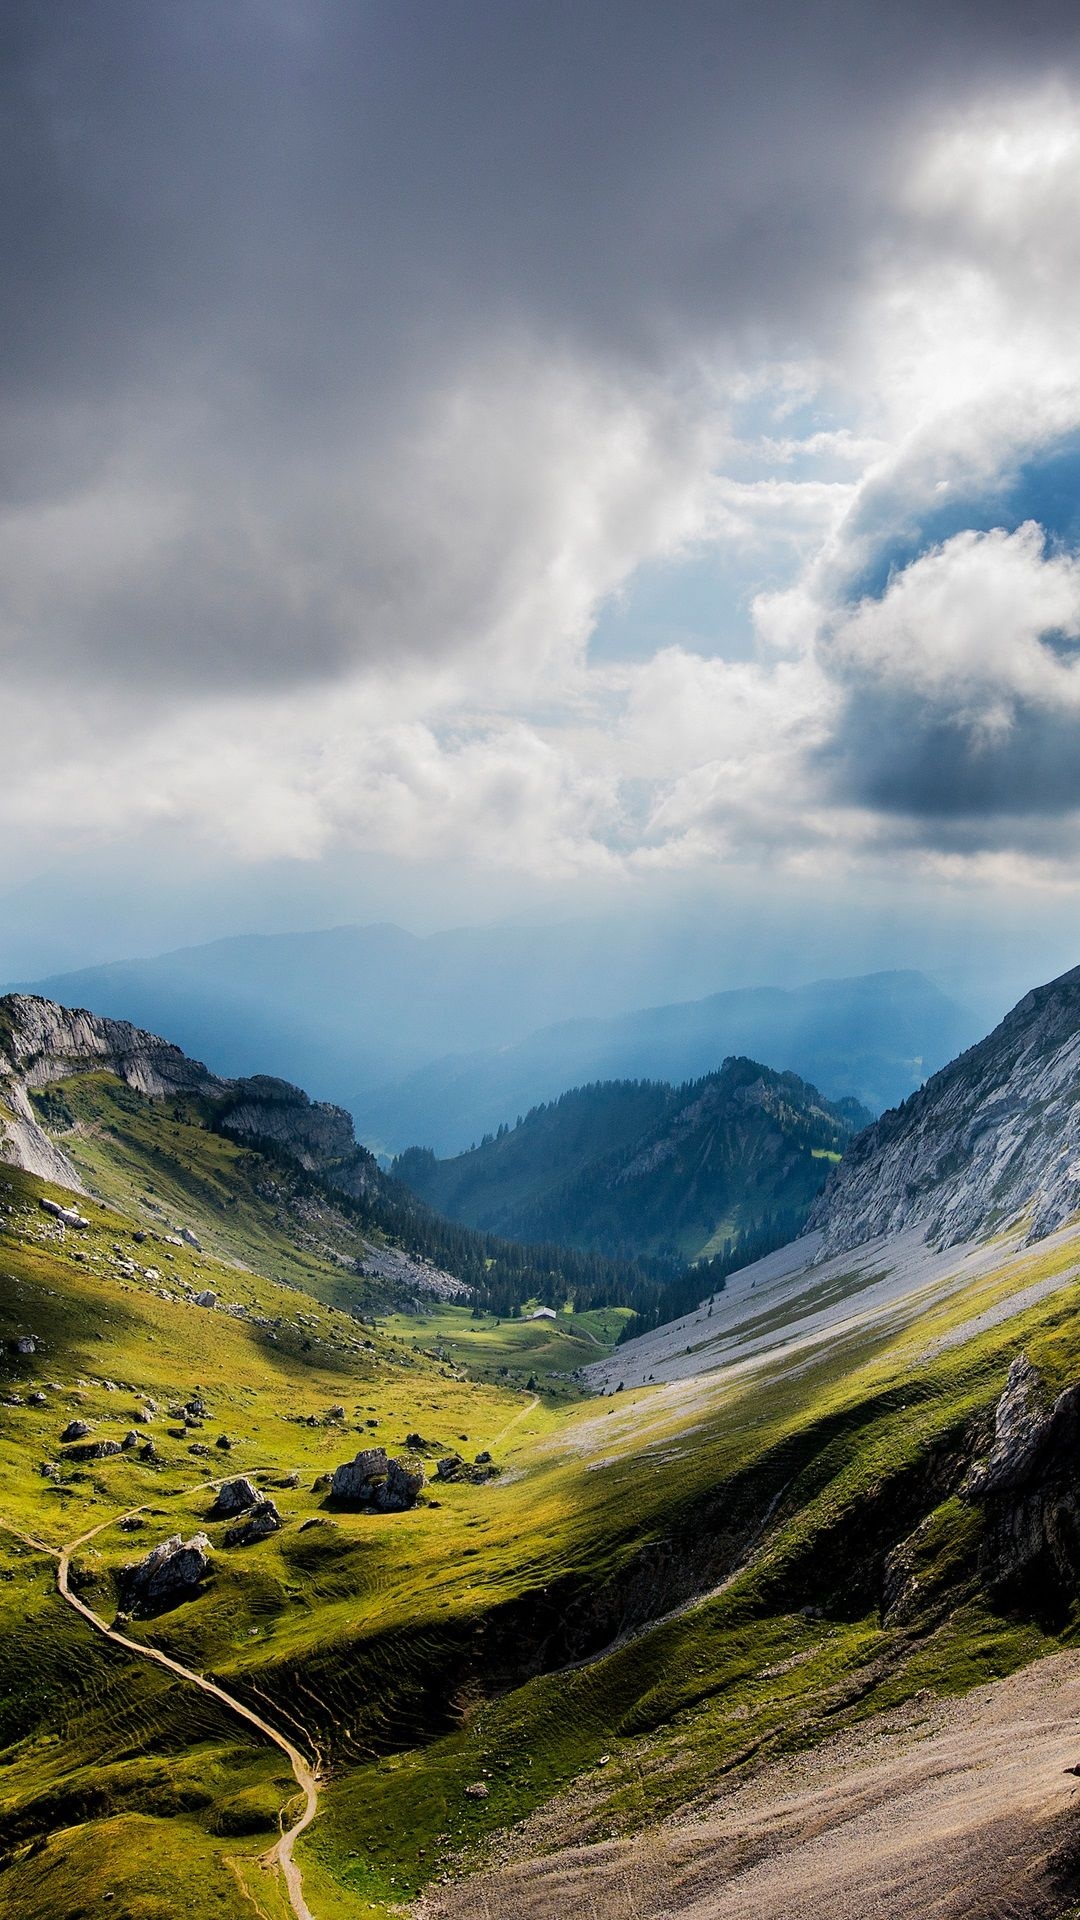 Mount Pilatus Switzerland, Clouds iPhone wallpaper, Wallpaper iPhone 6 Plus, Travels expert, 1080x1920 Full HD Phone